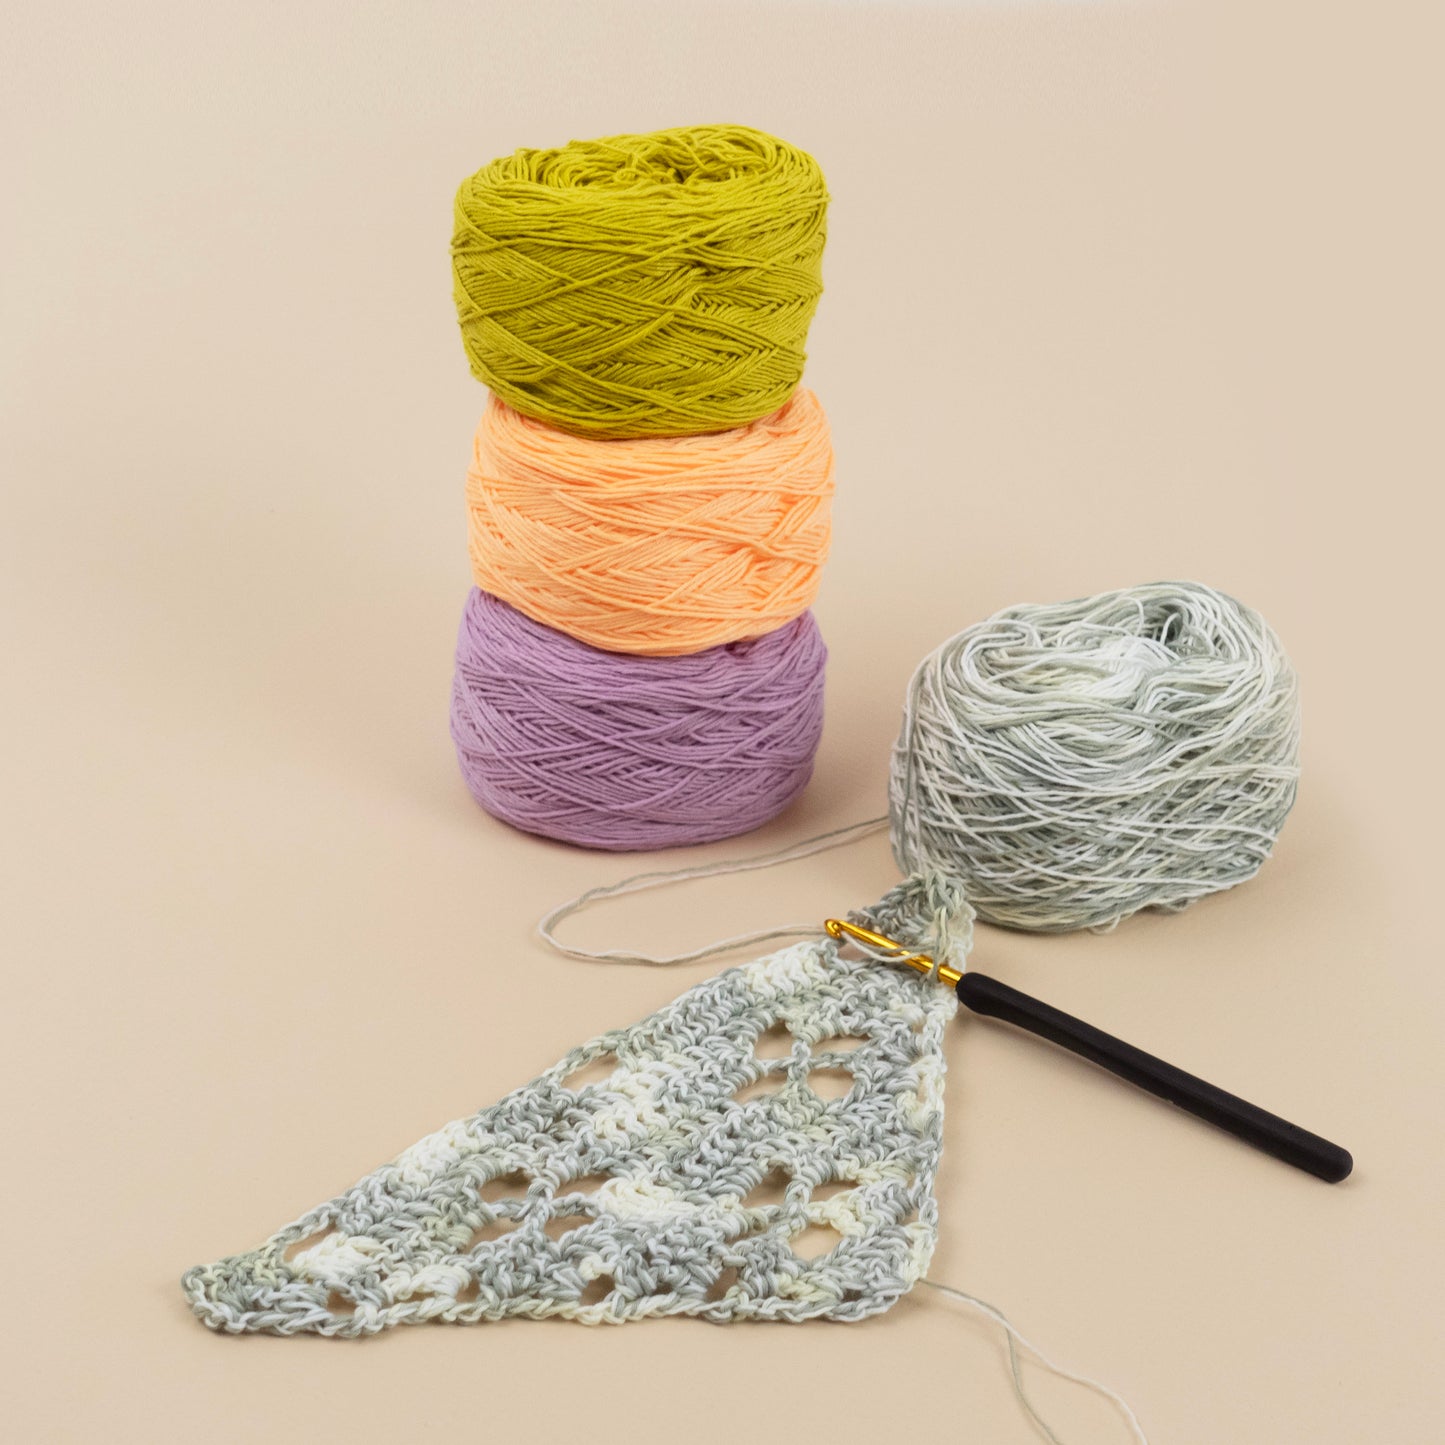 Monarch Butterfly Ecology-Inspired Crochet Bandana